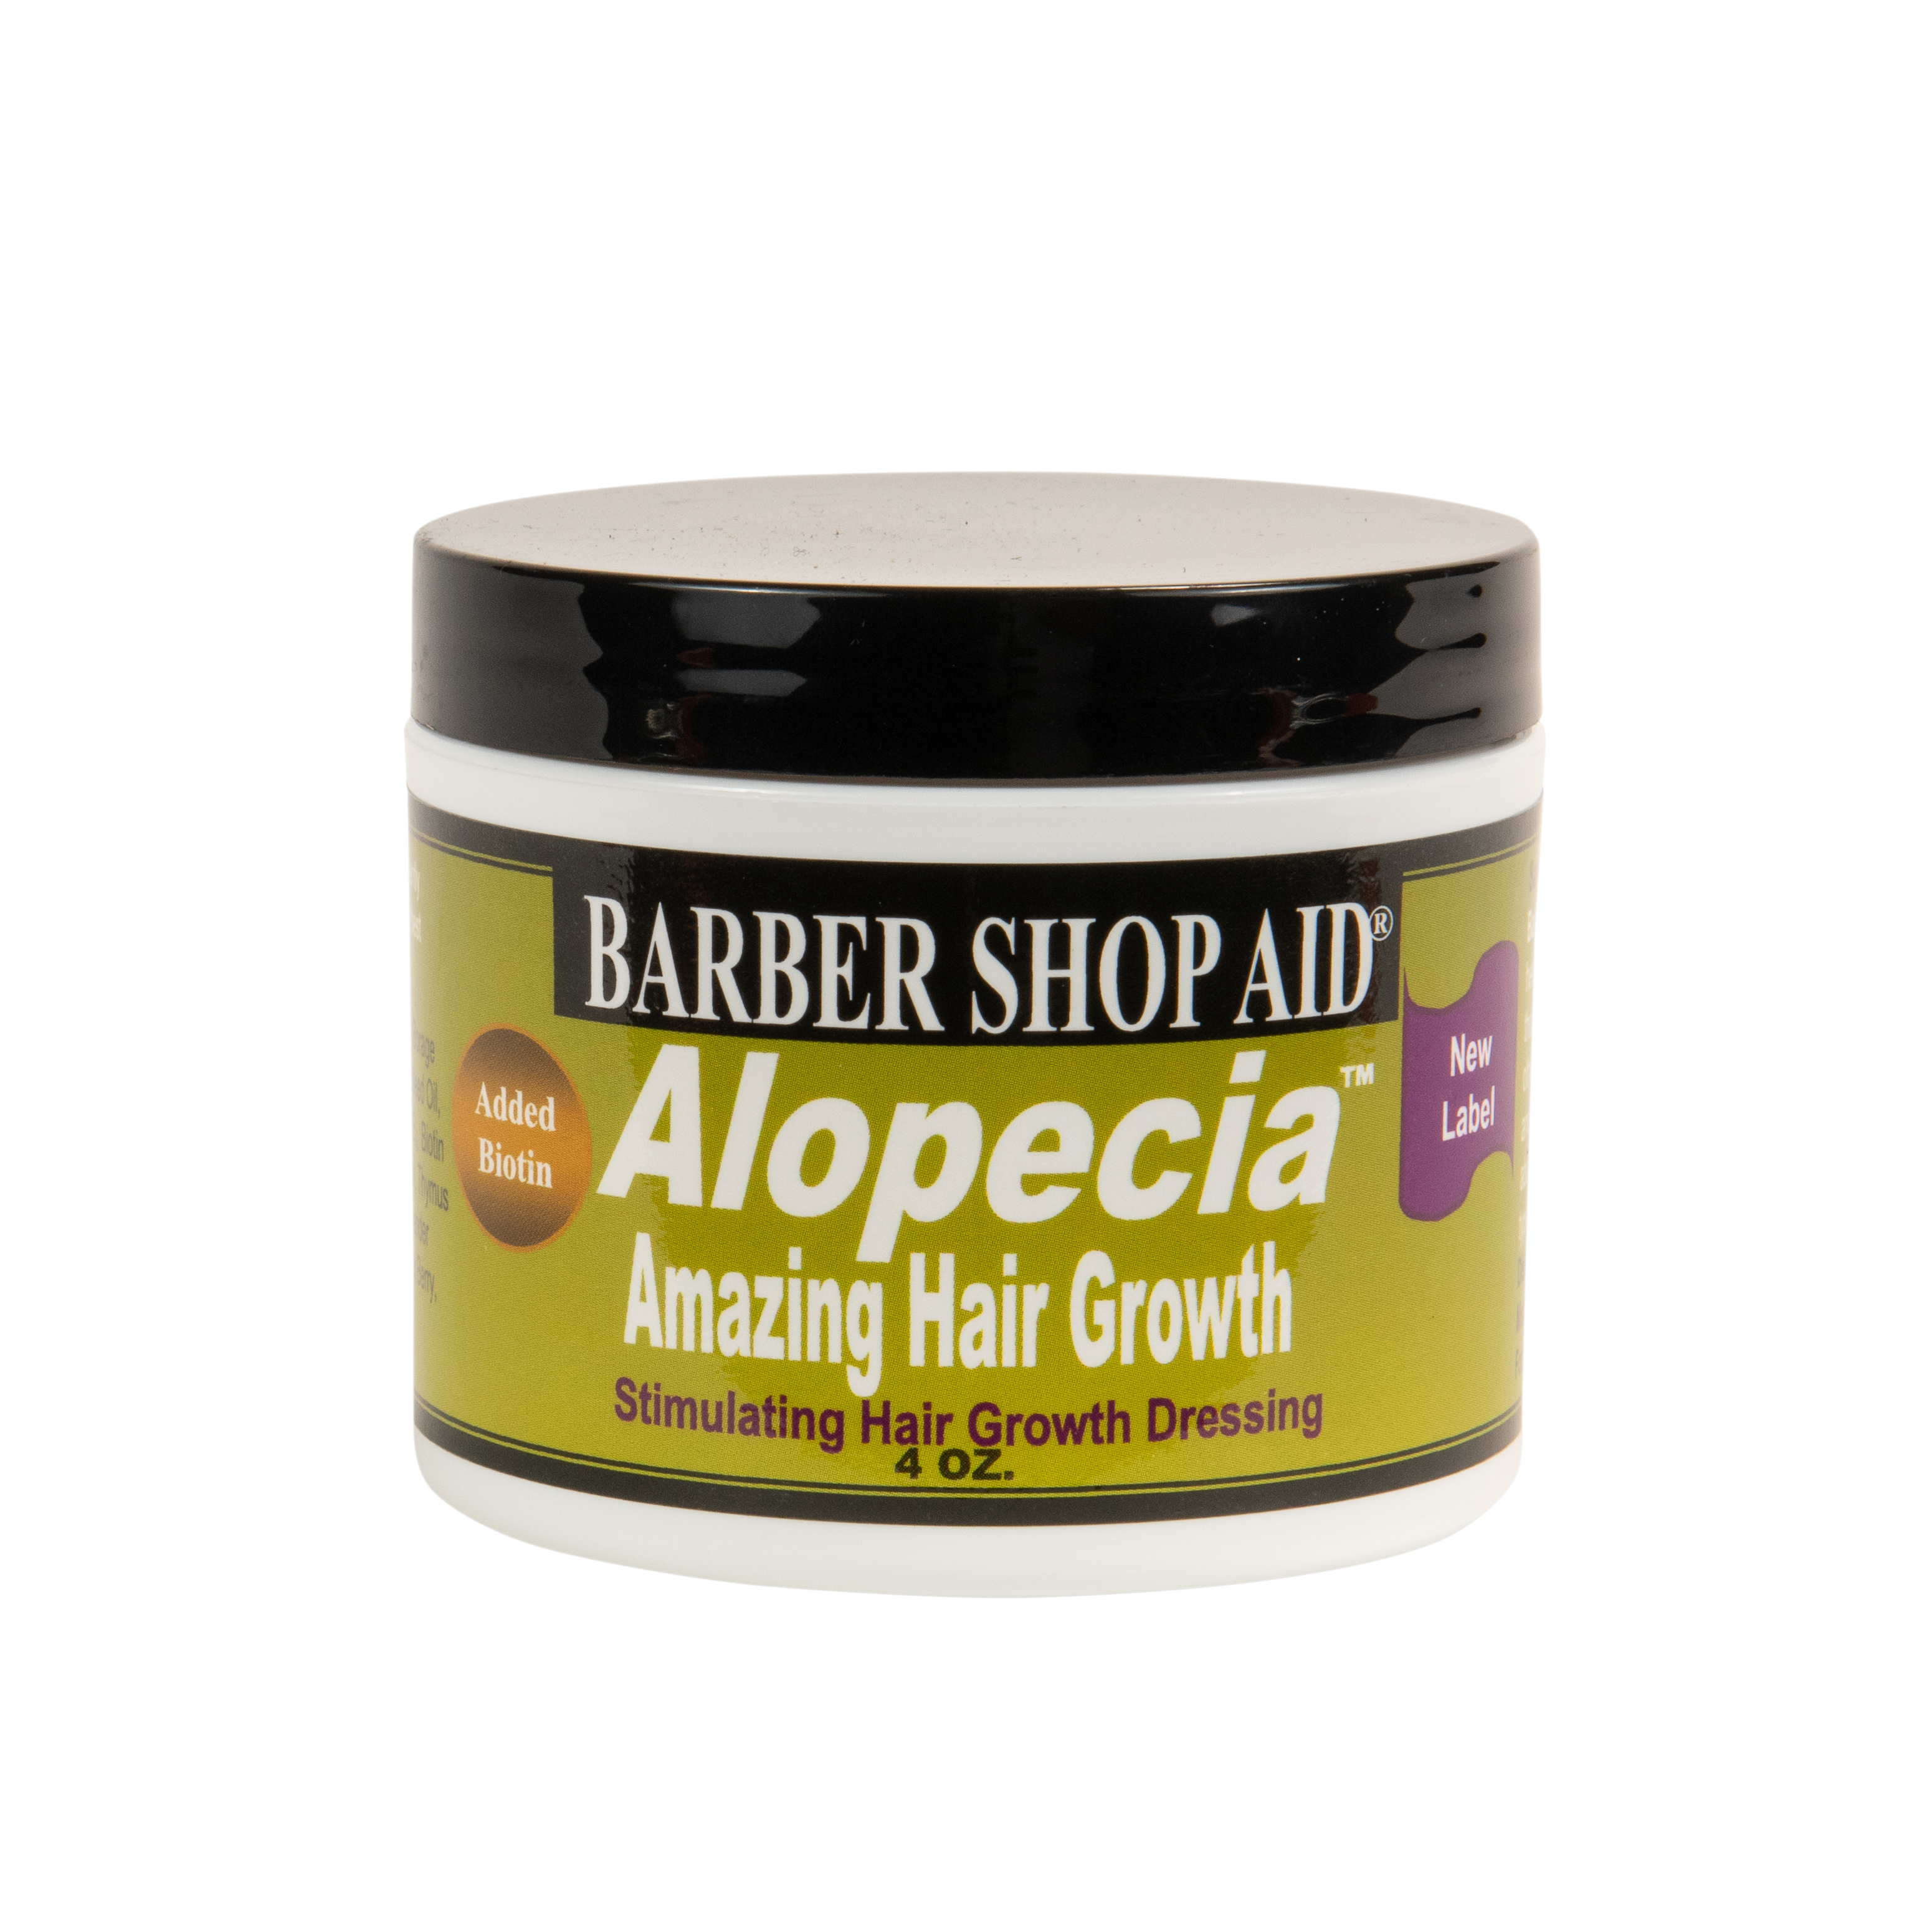 Barber Shop Aid Alopecia Hair Growth Dressing